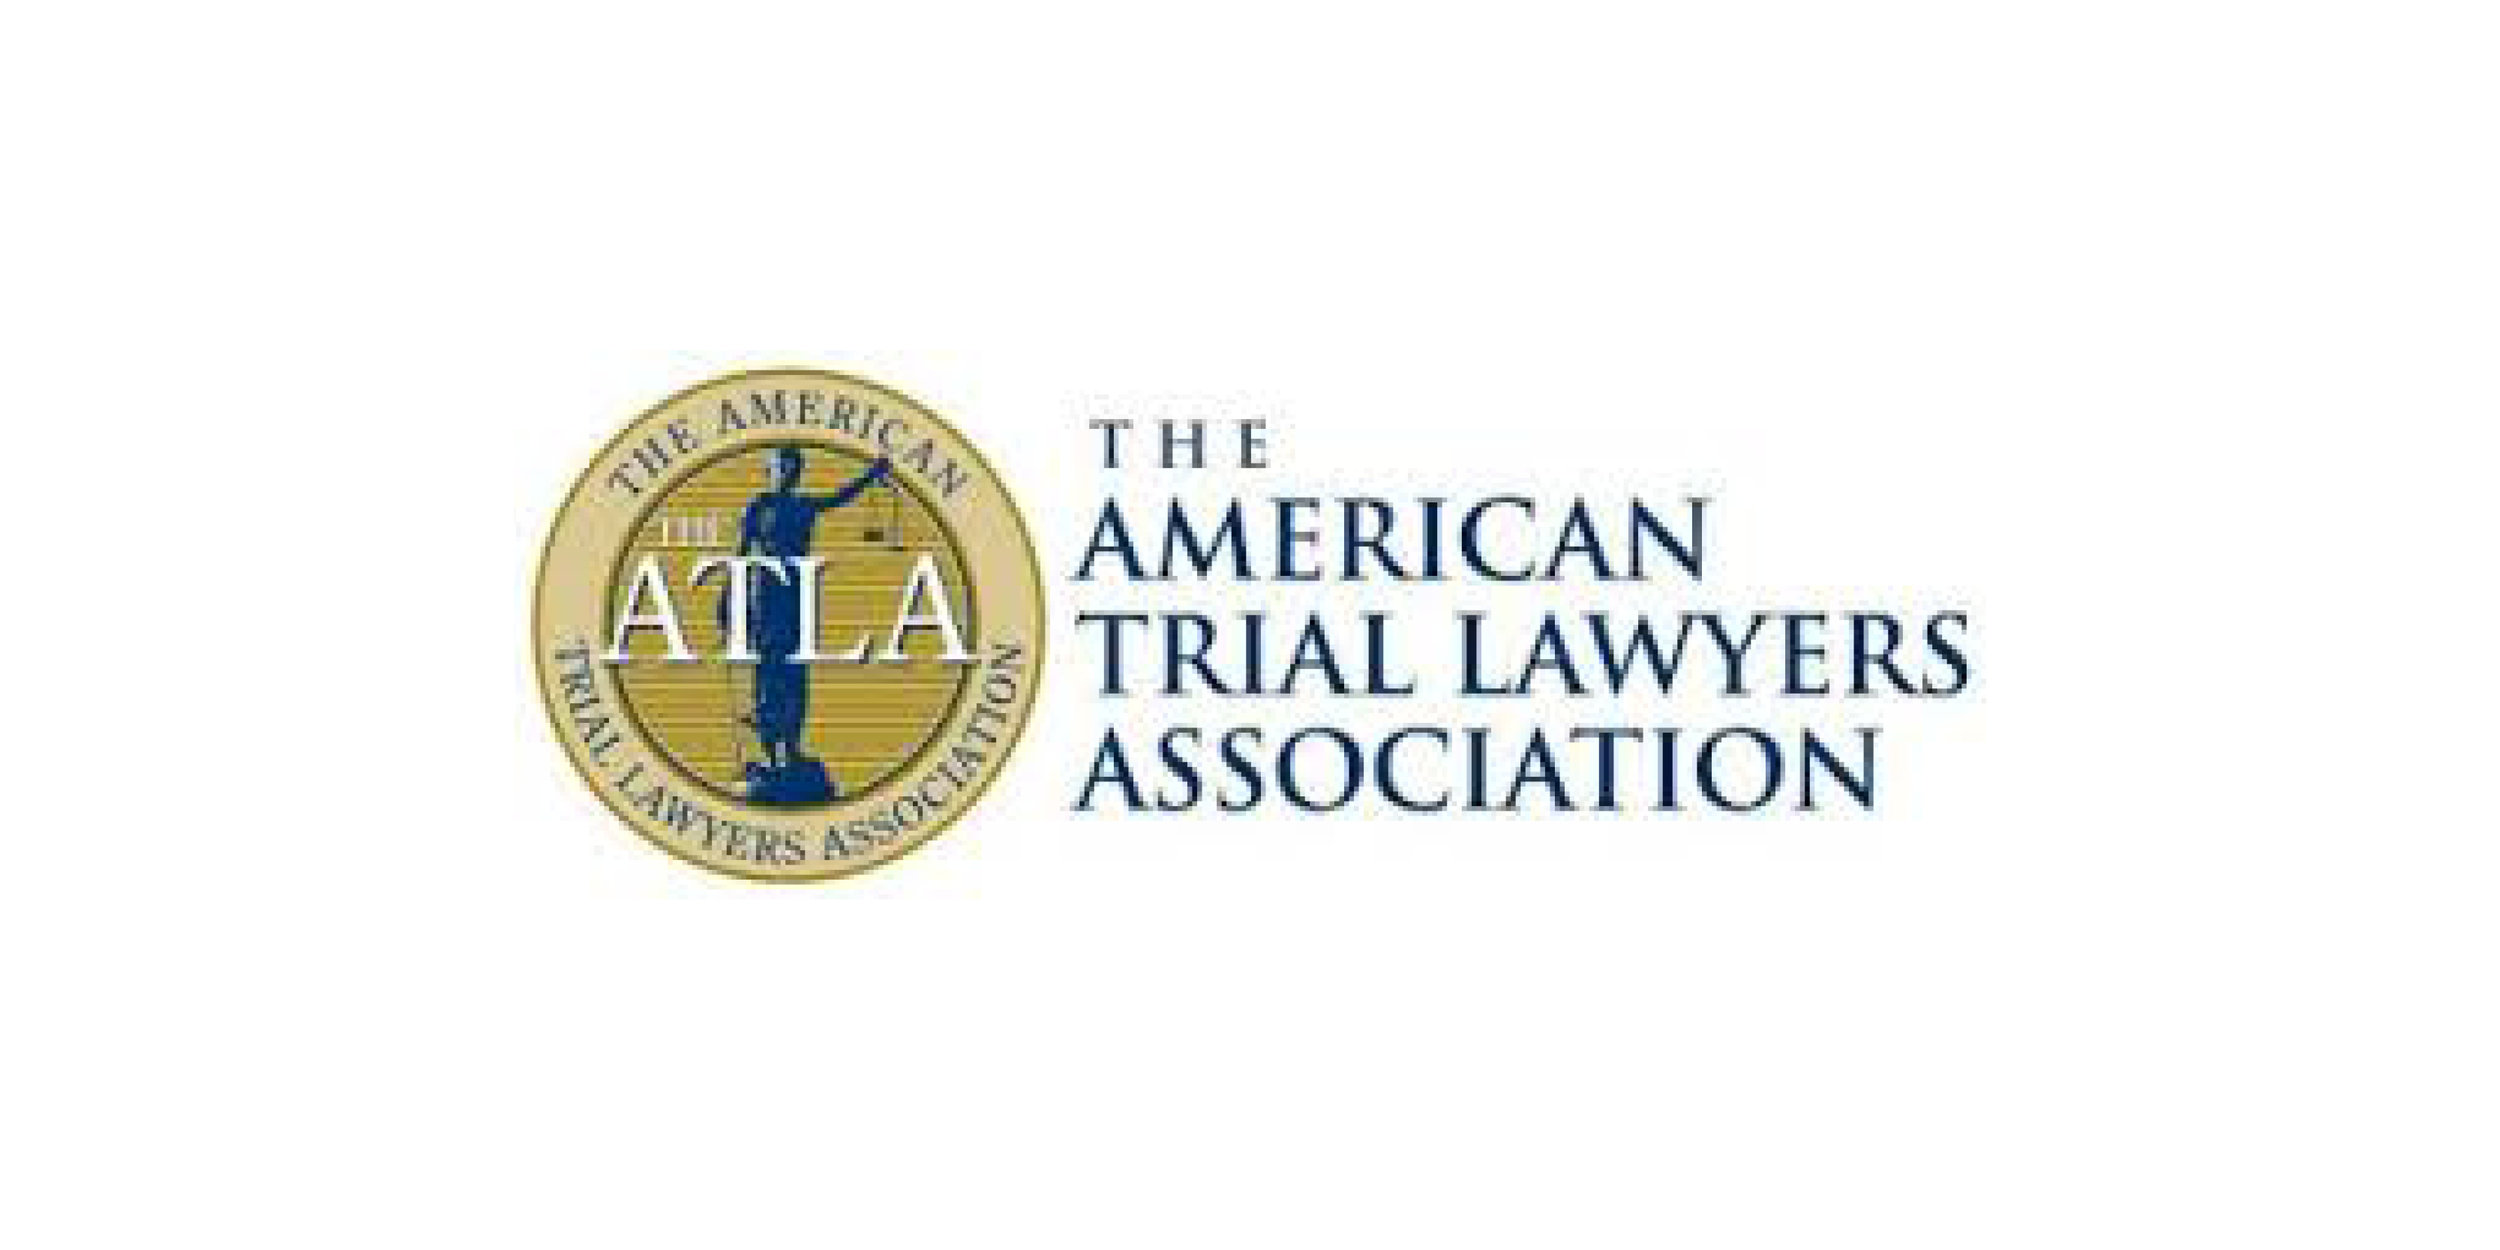 Law_Association_Logos5.jpg